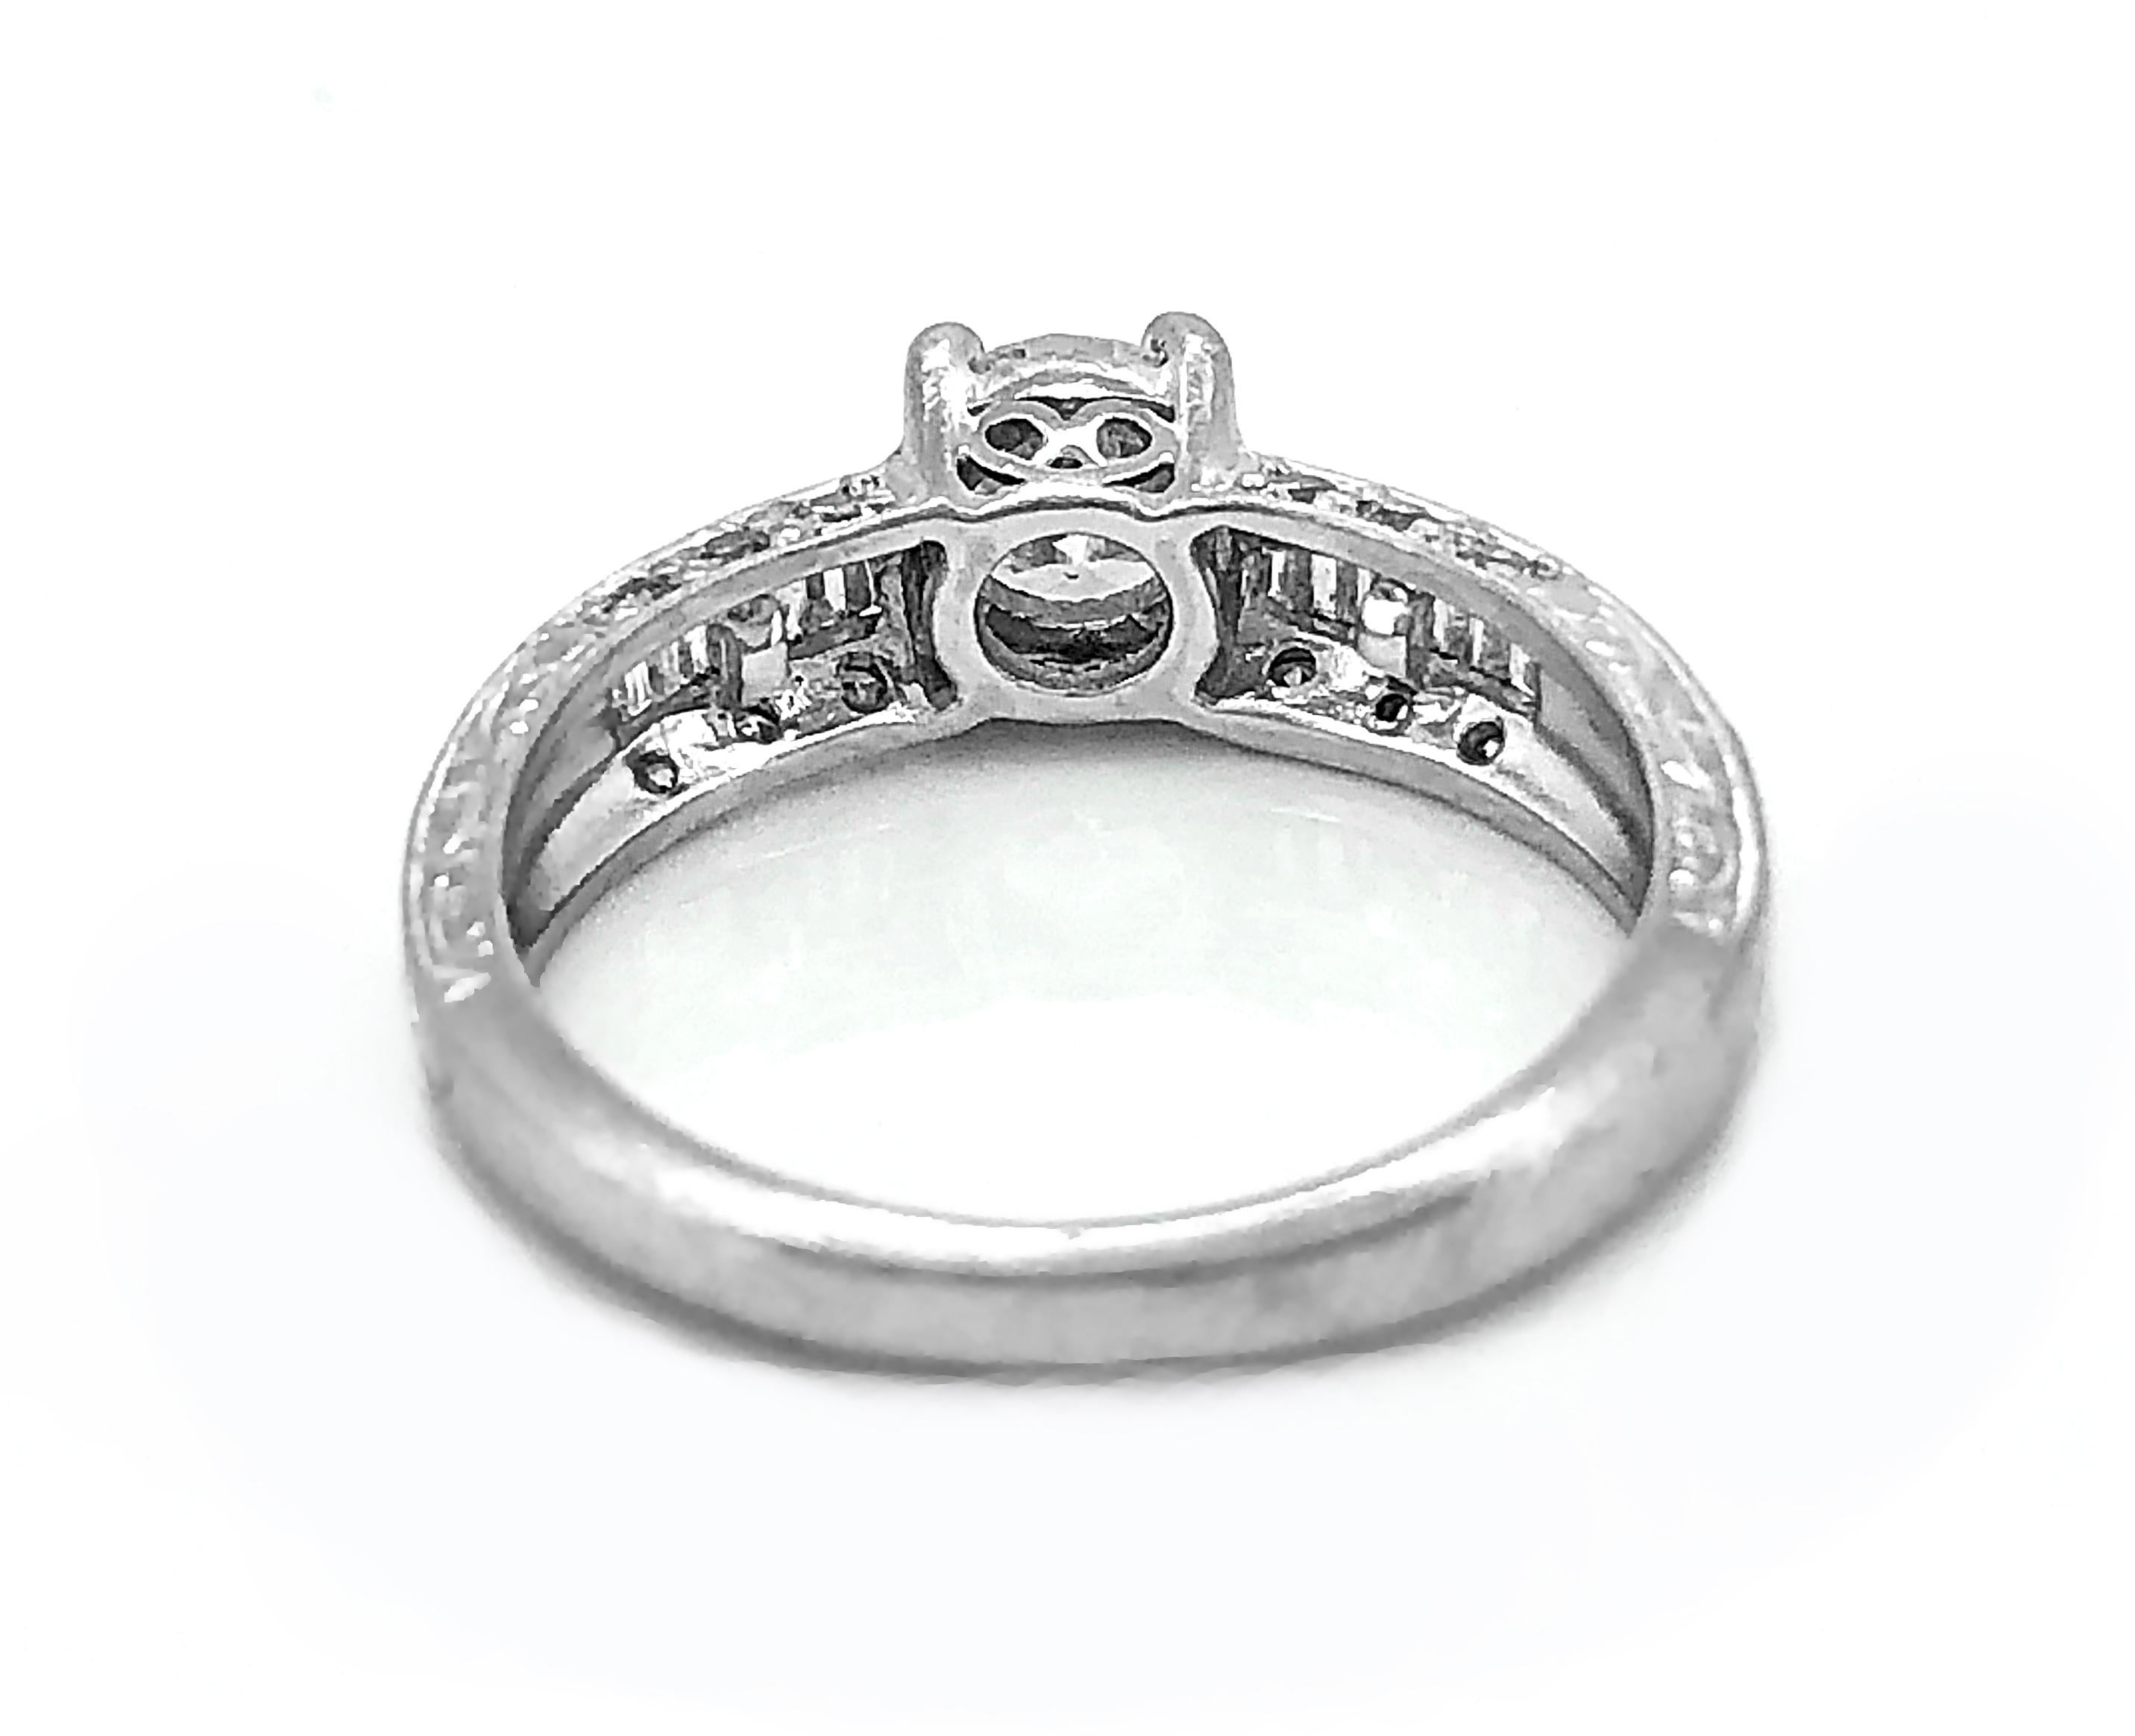 65 carat diamond ring